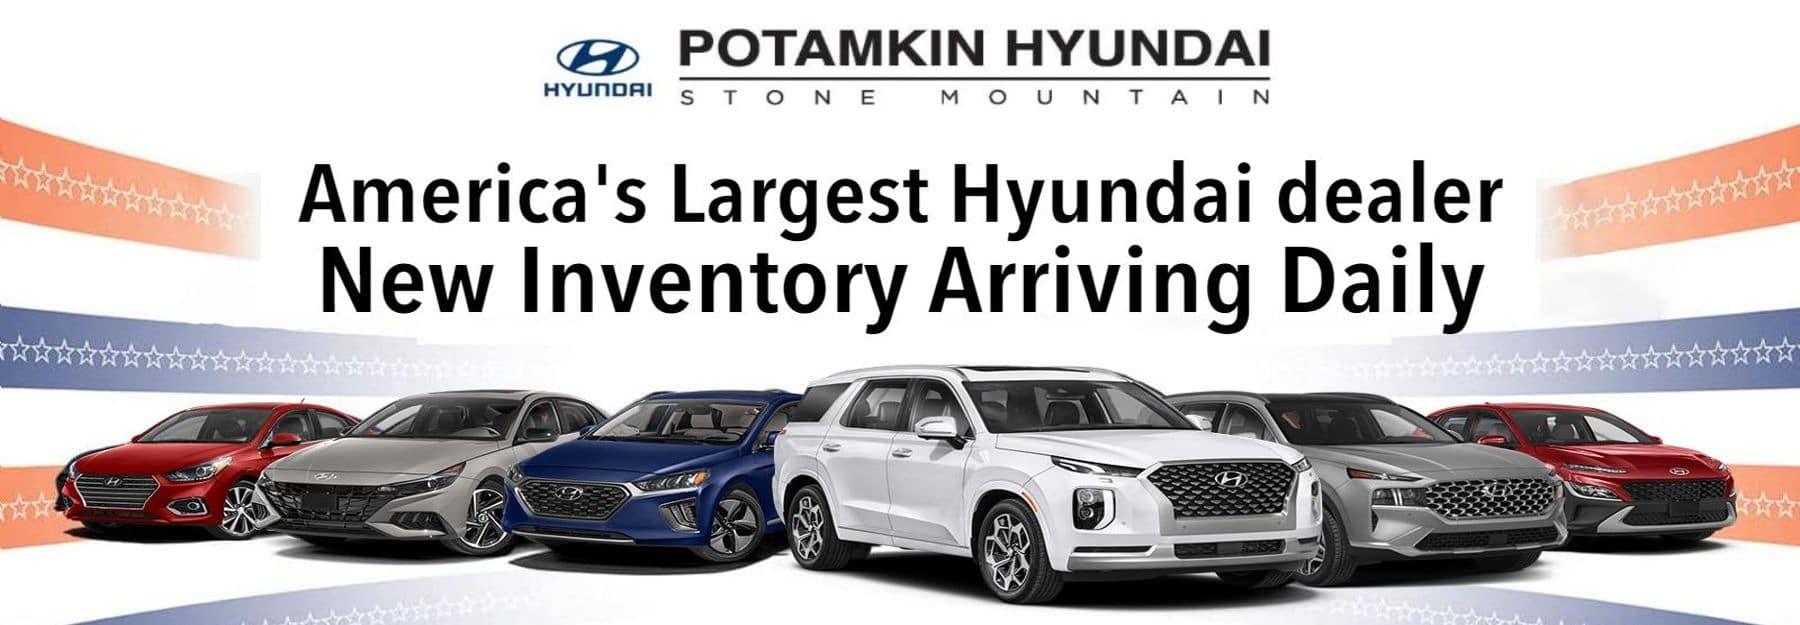 Americas Largest Hyundai Dealer - Banner